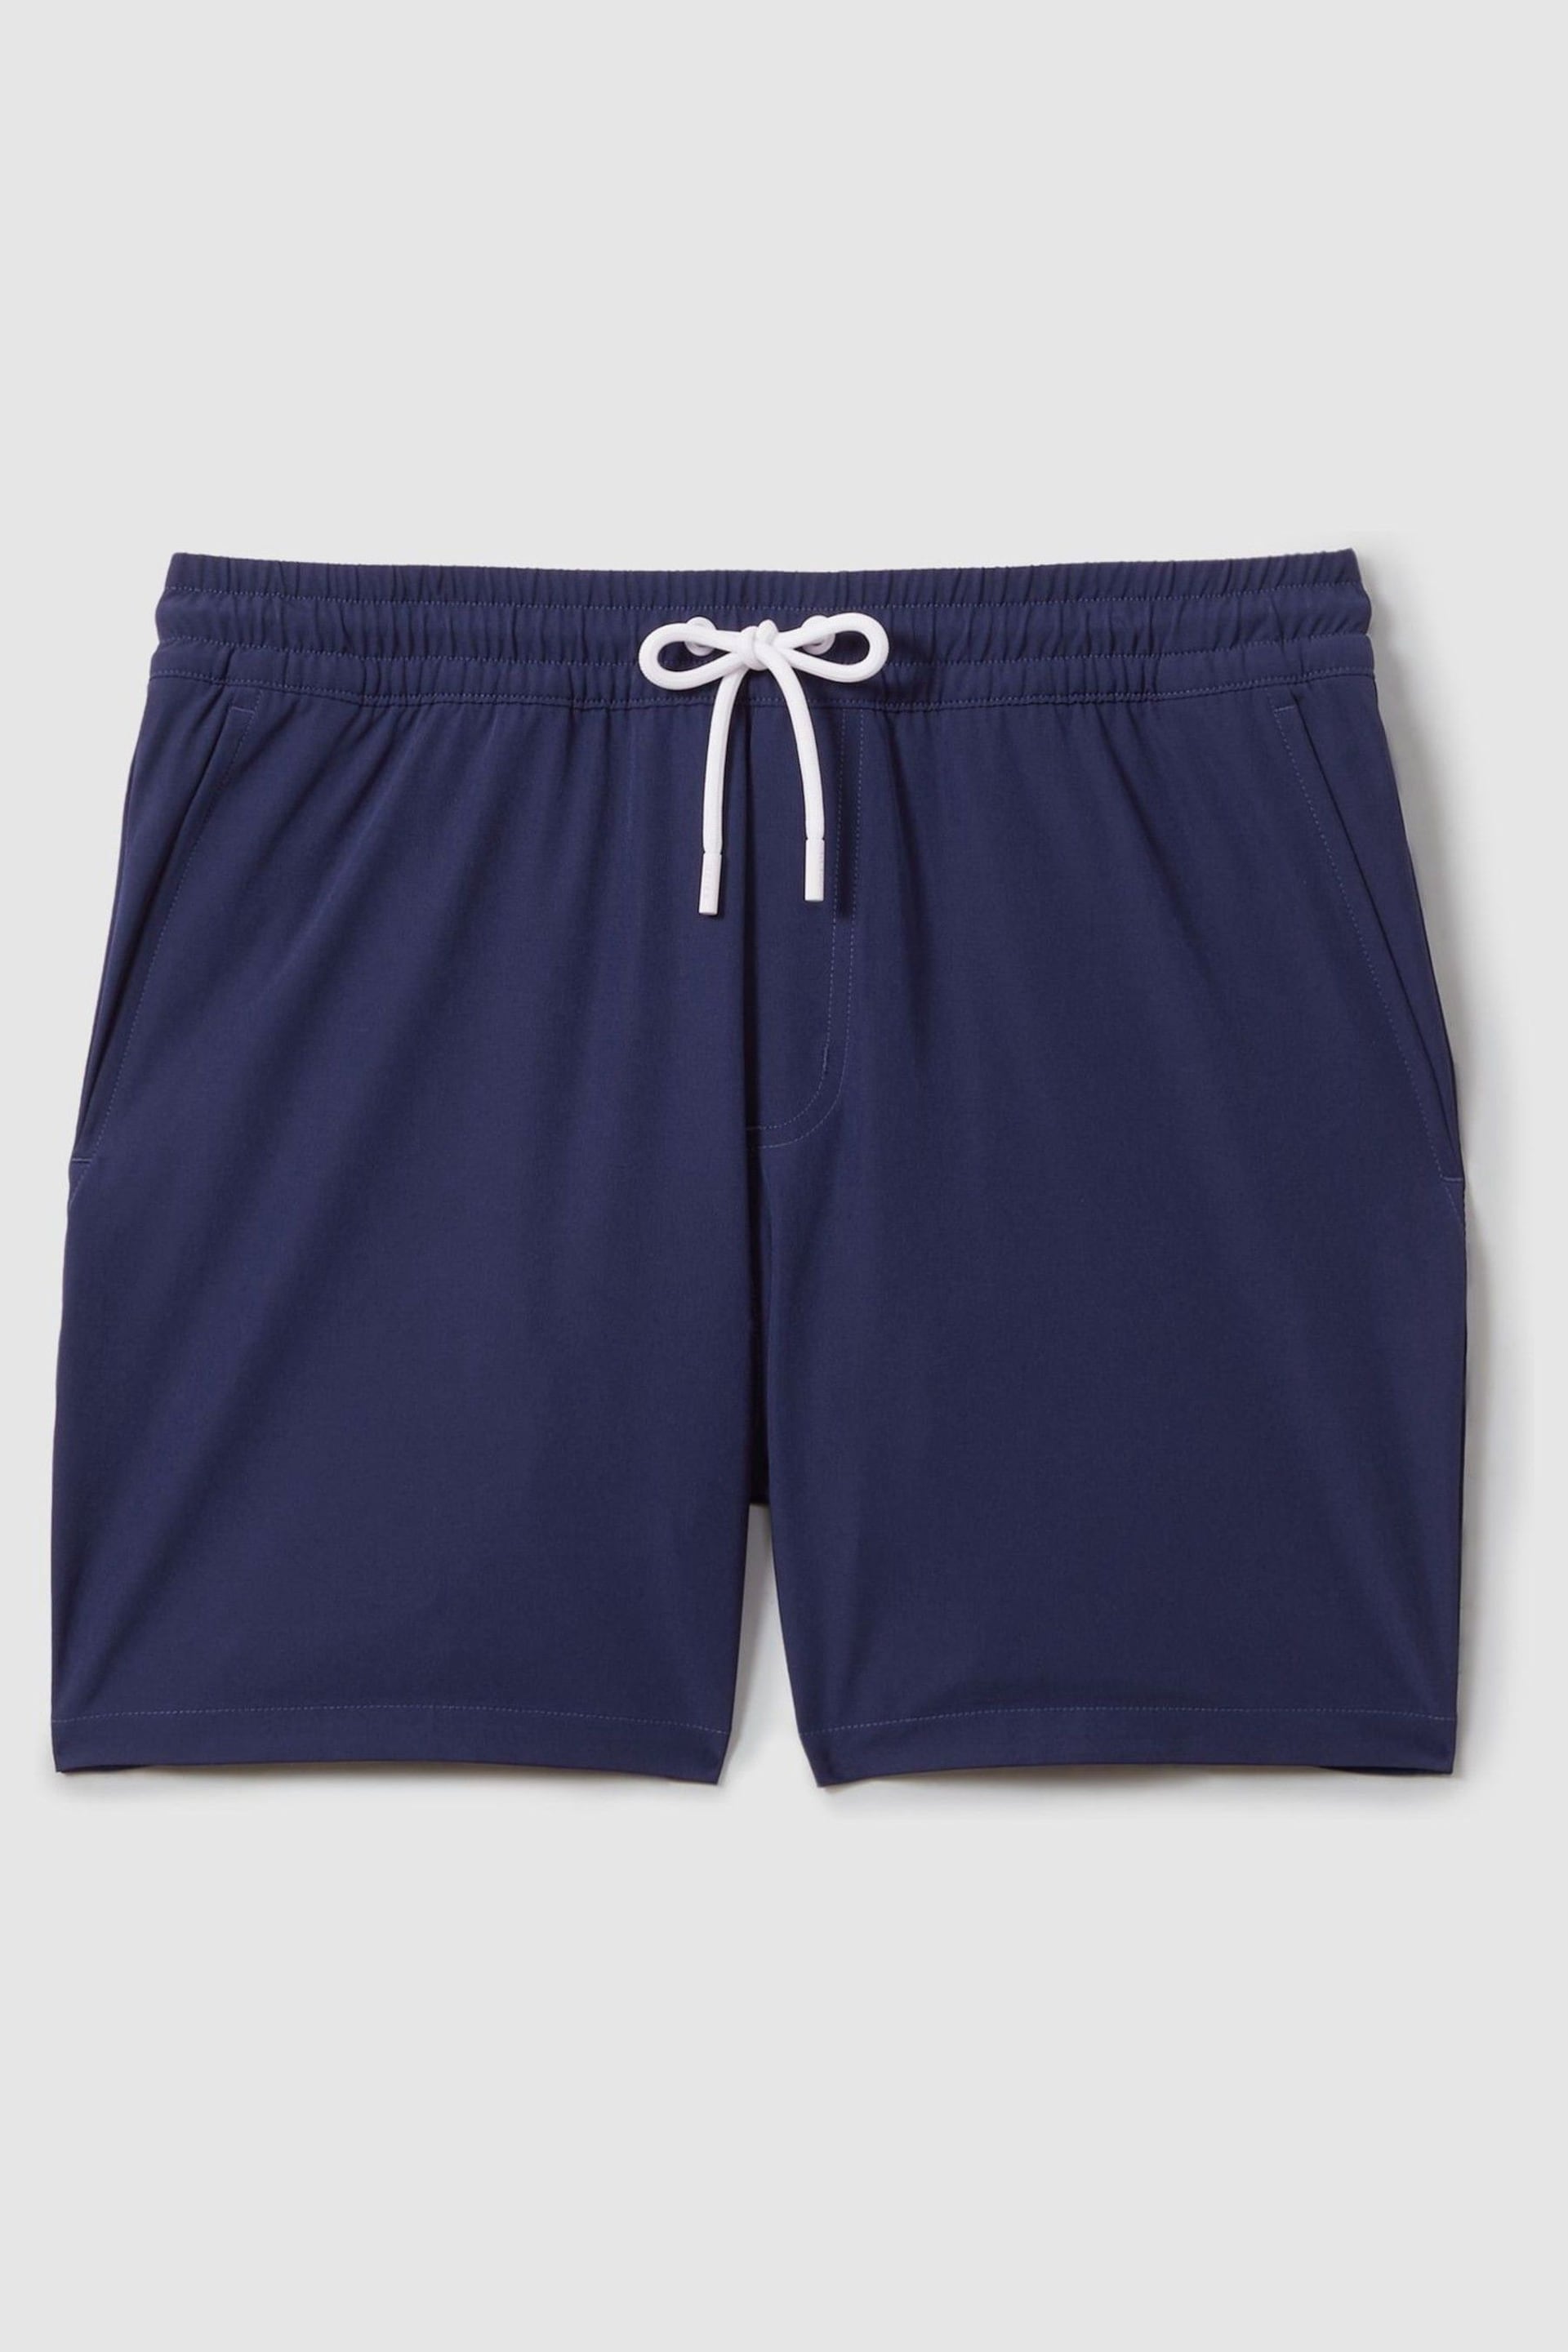 Reiss Lapis Blue Shore Plain Drawstring Waist Swim Shorts - Image 2 of 5